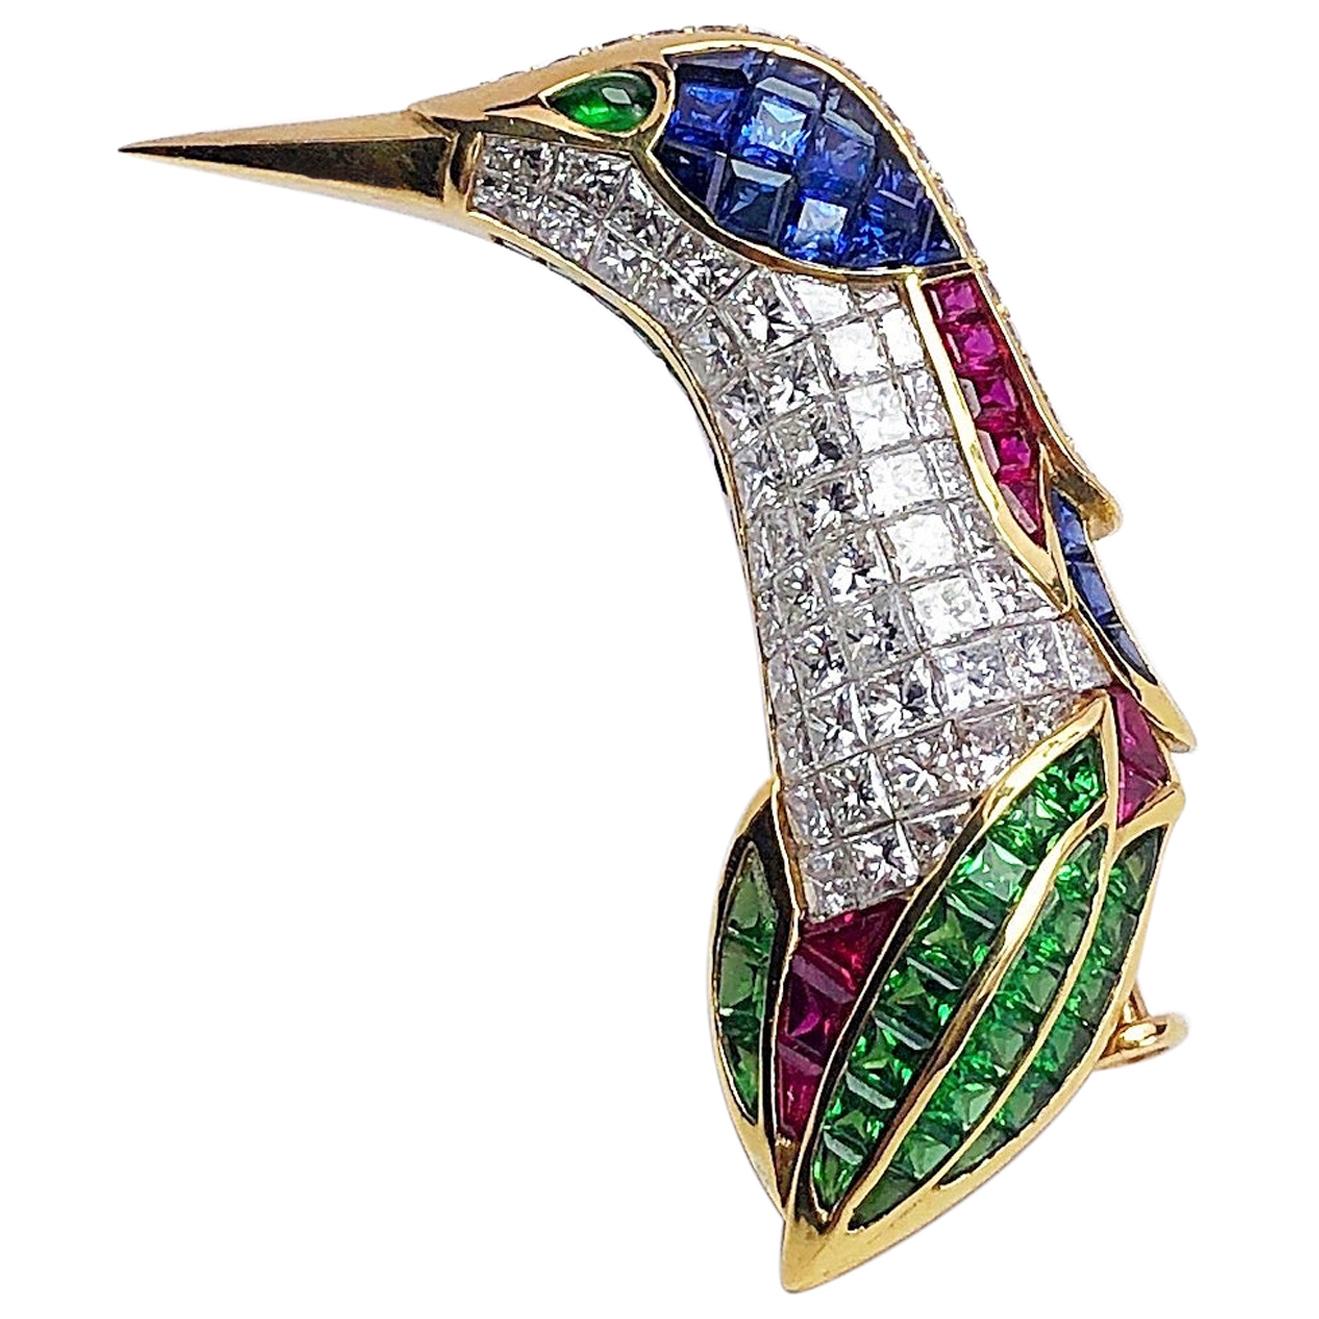 18 Karat Gold Humming Bird Brooch with Invisibly Set Diamonds and Gem Stones